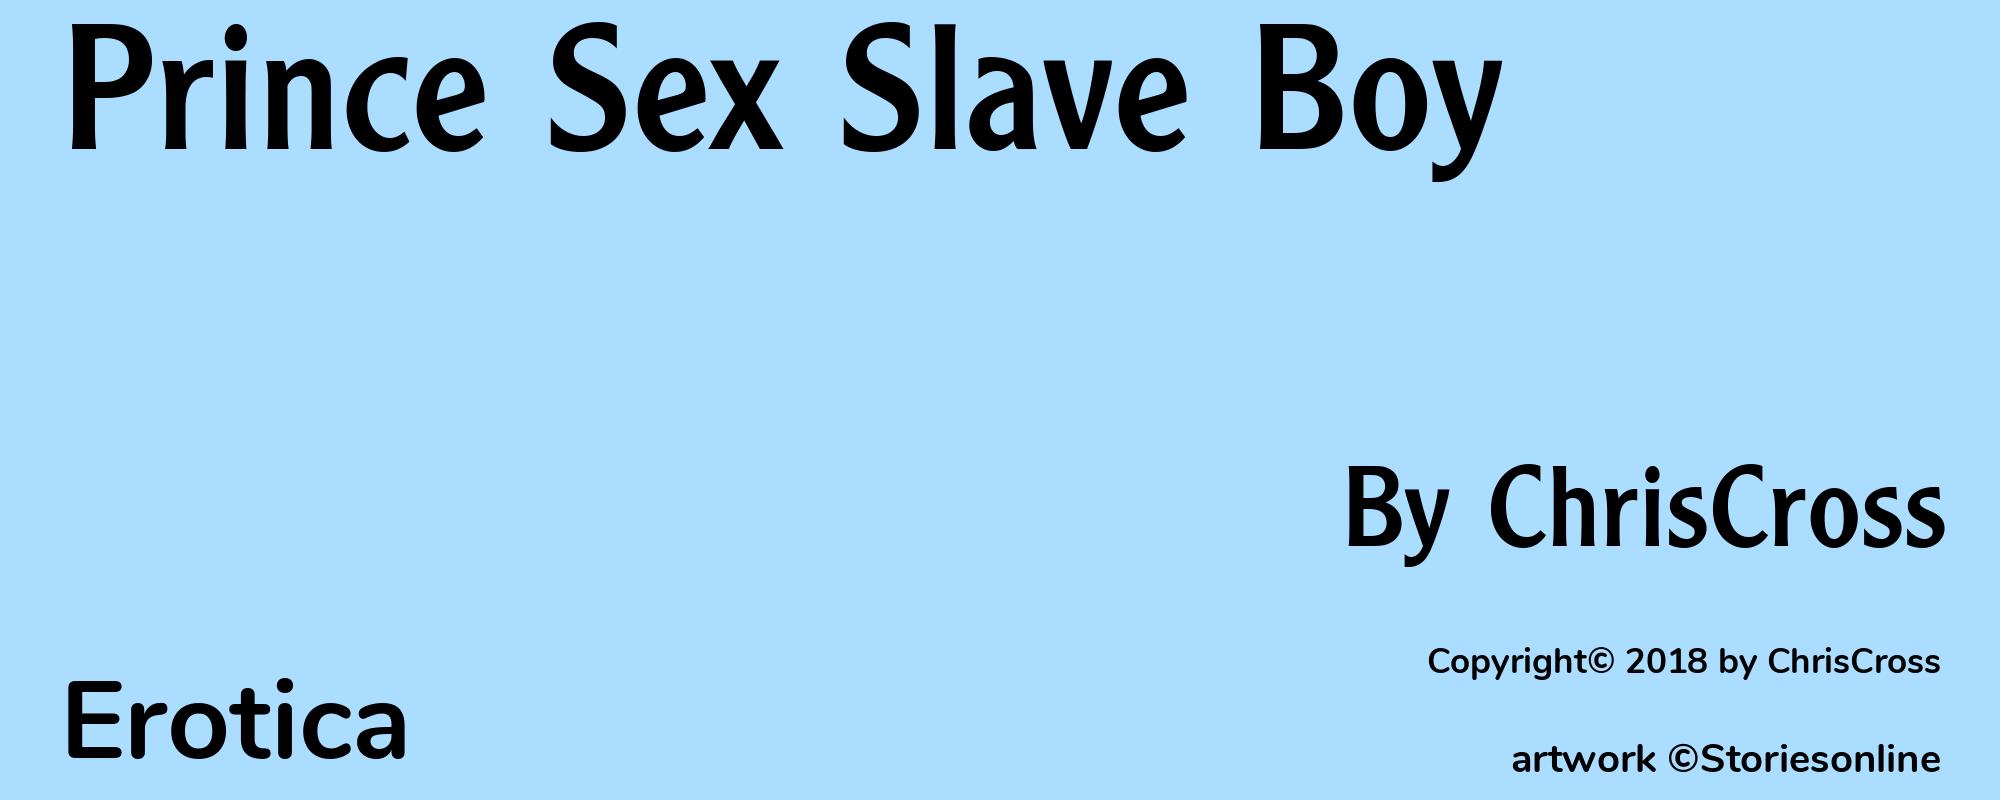 Prince Sex Slave Boy - Cover